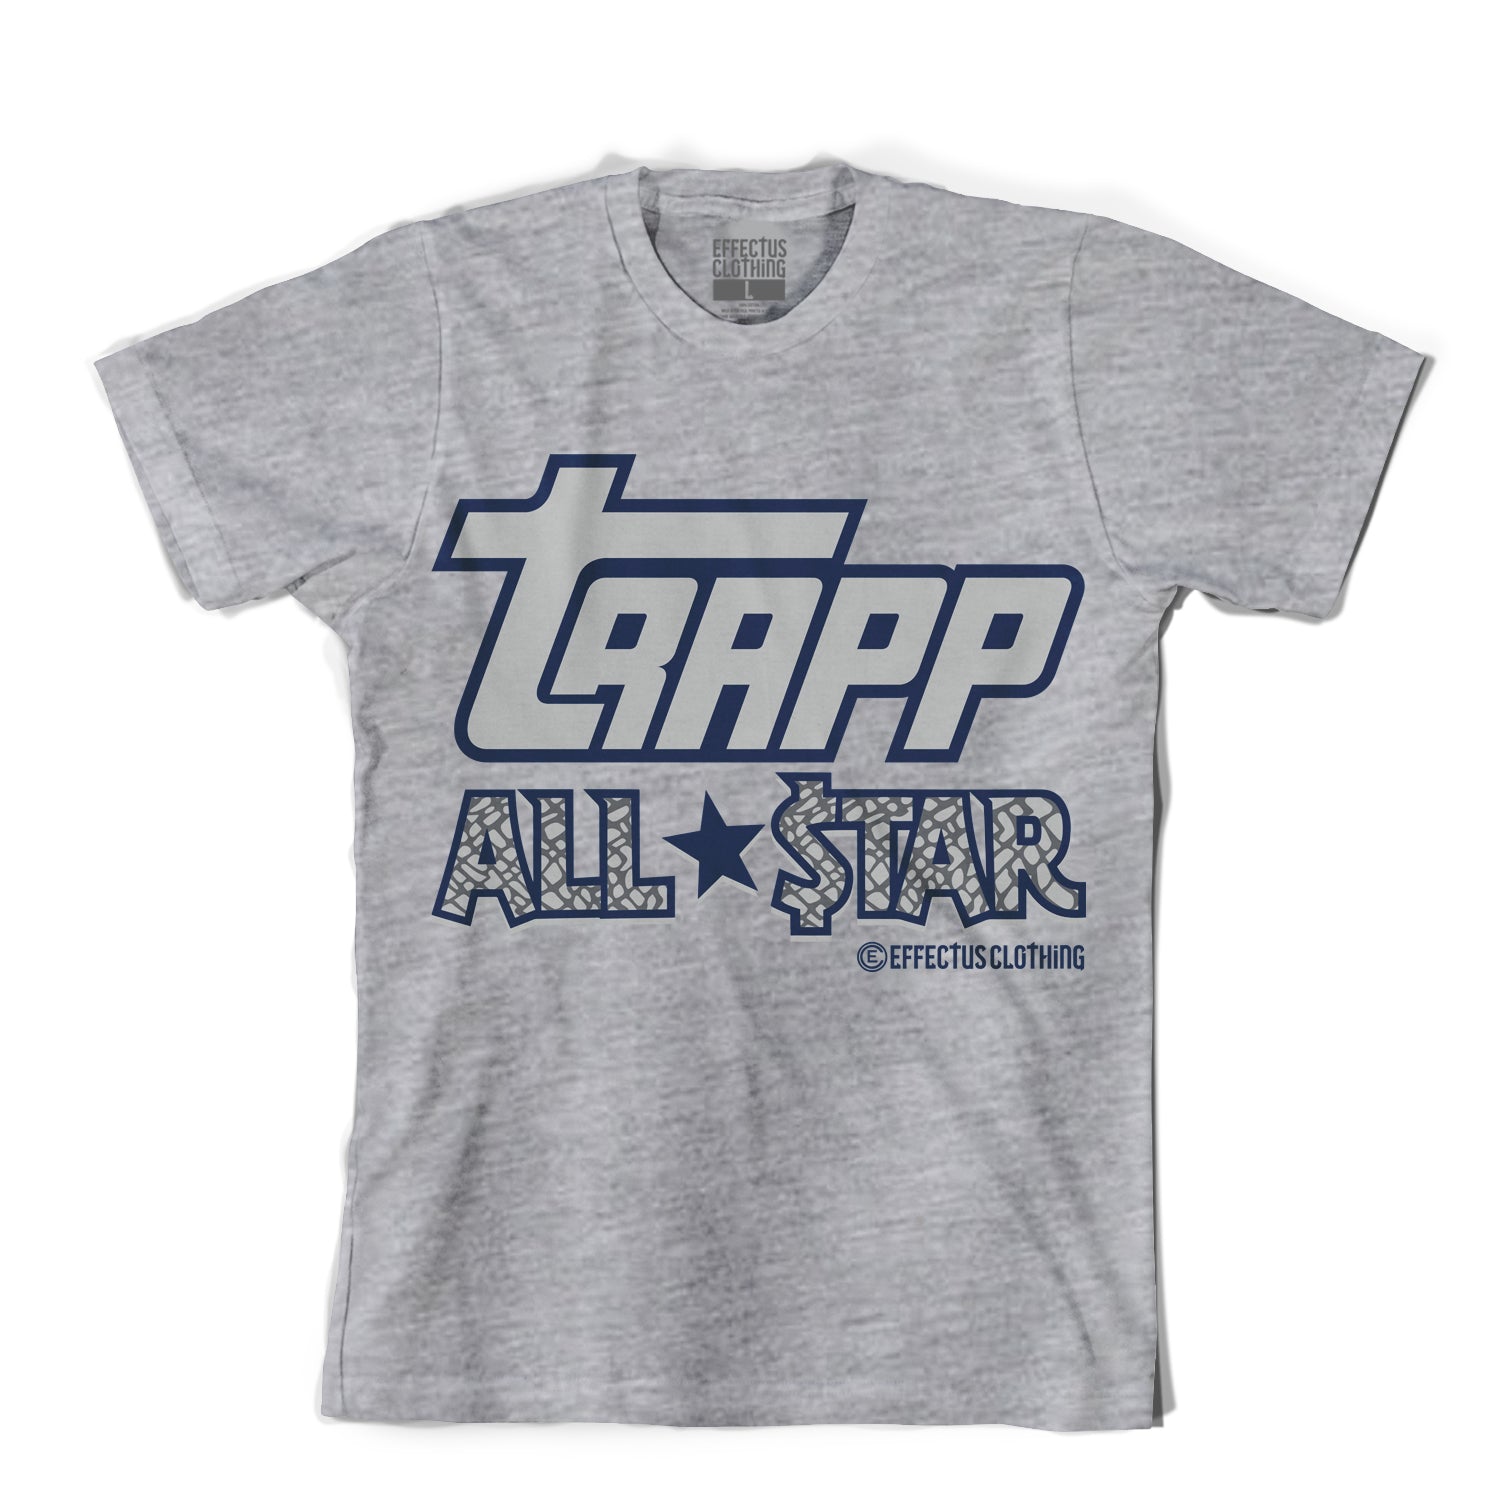 TRAPP All Star